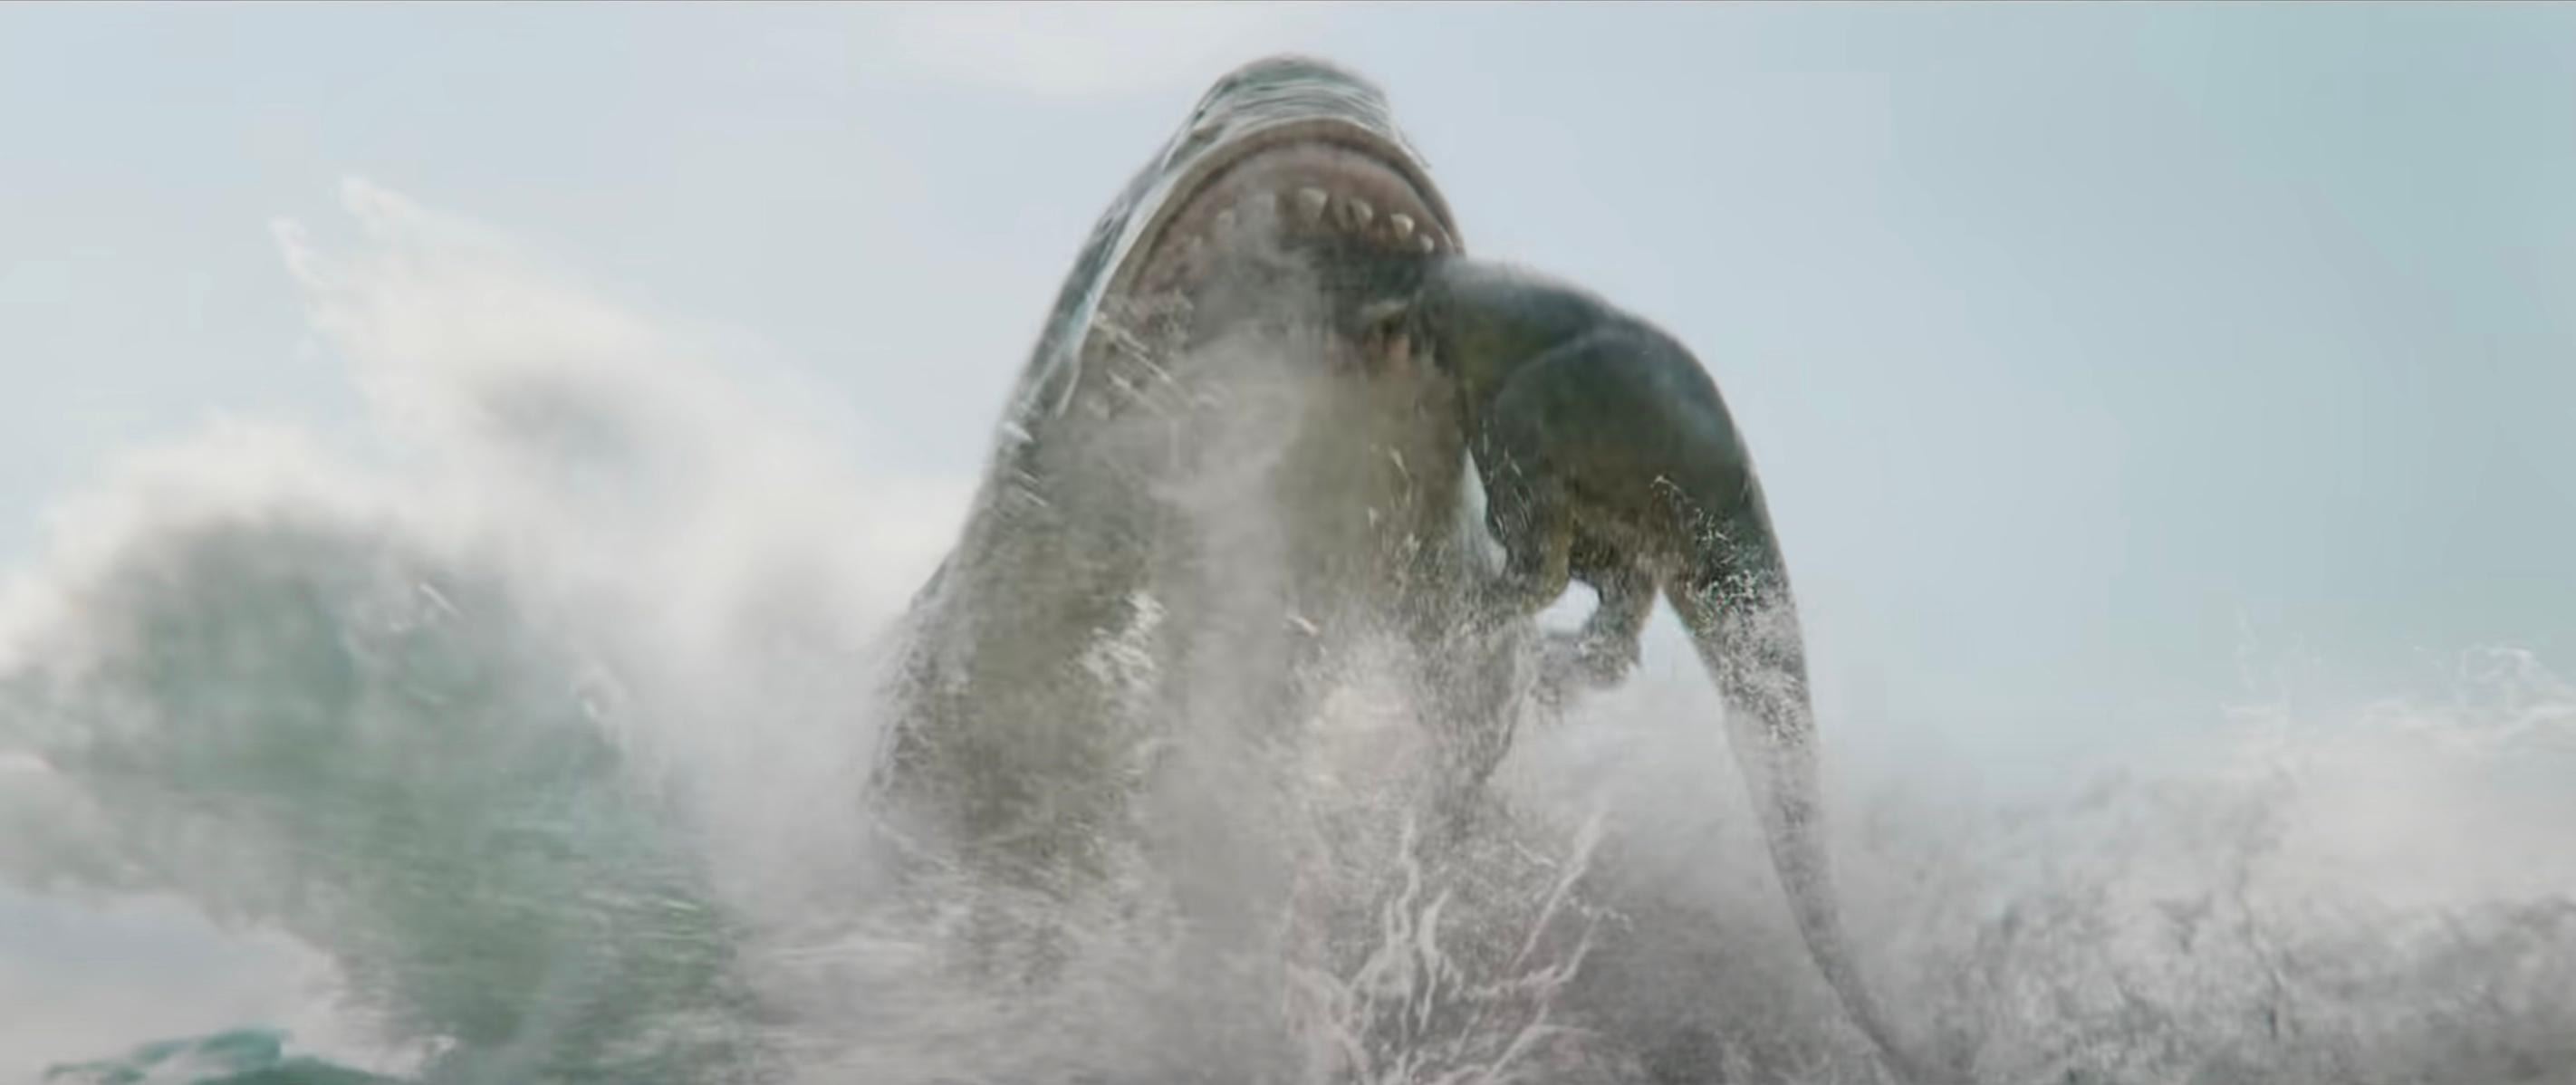 Megalodon makan dinosaur dalam treler 'Meg 2'